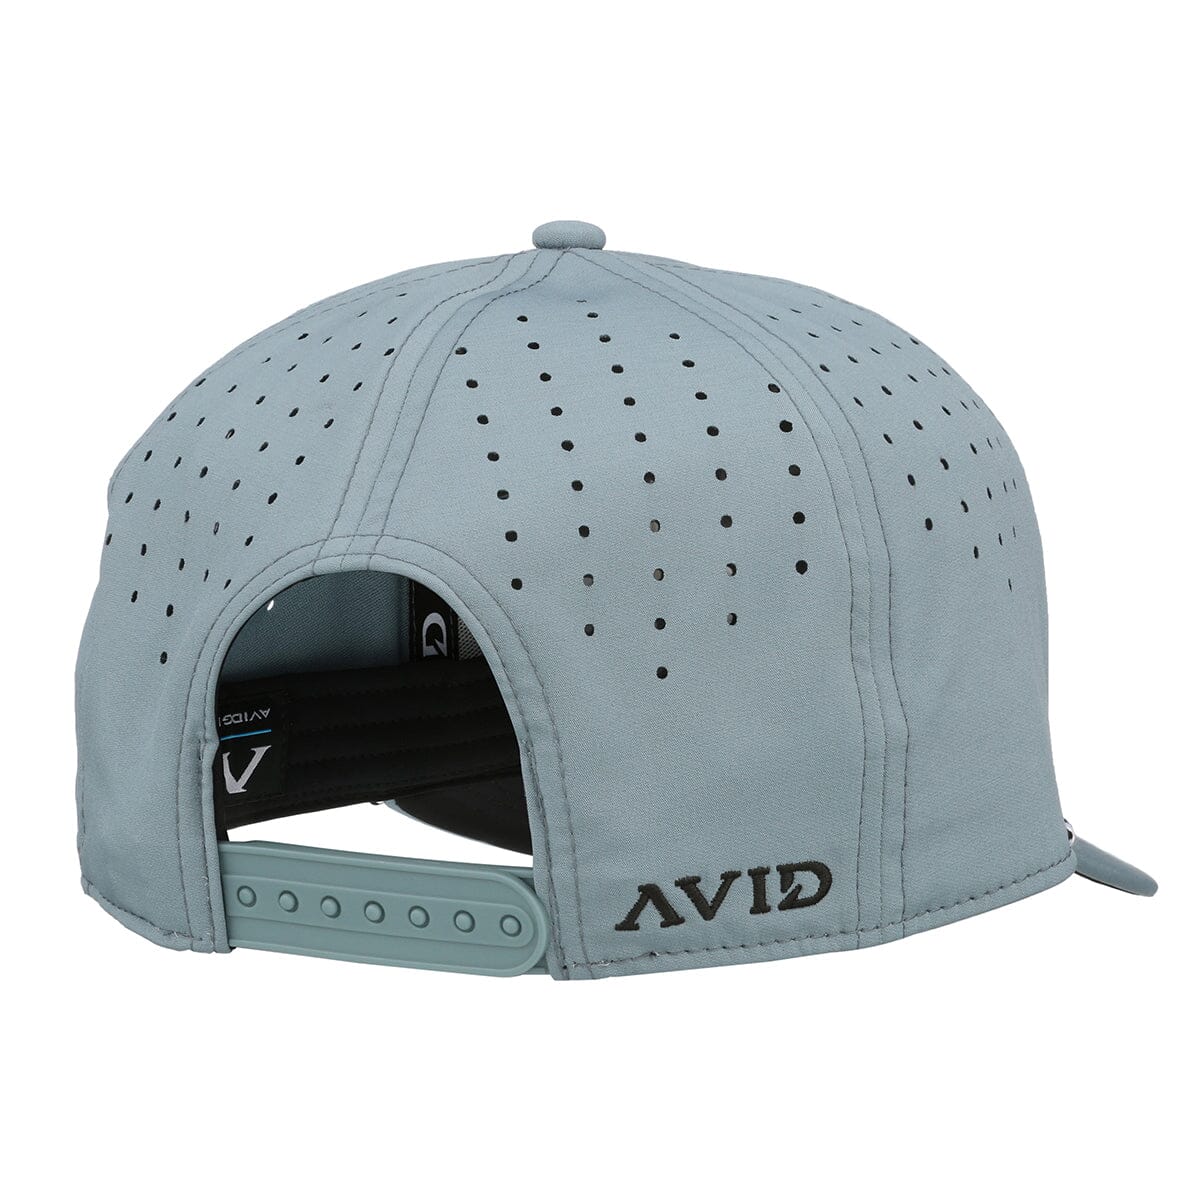 Avid Ace Iconic Performance Hat